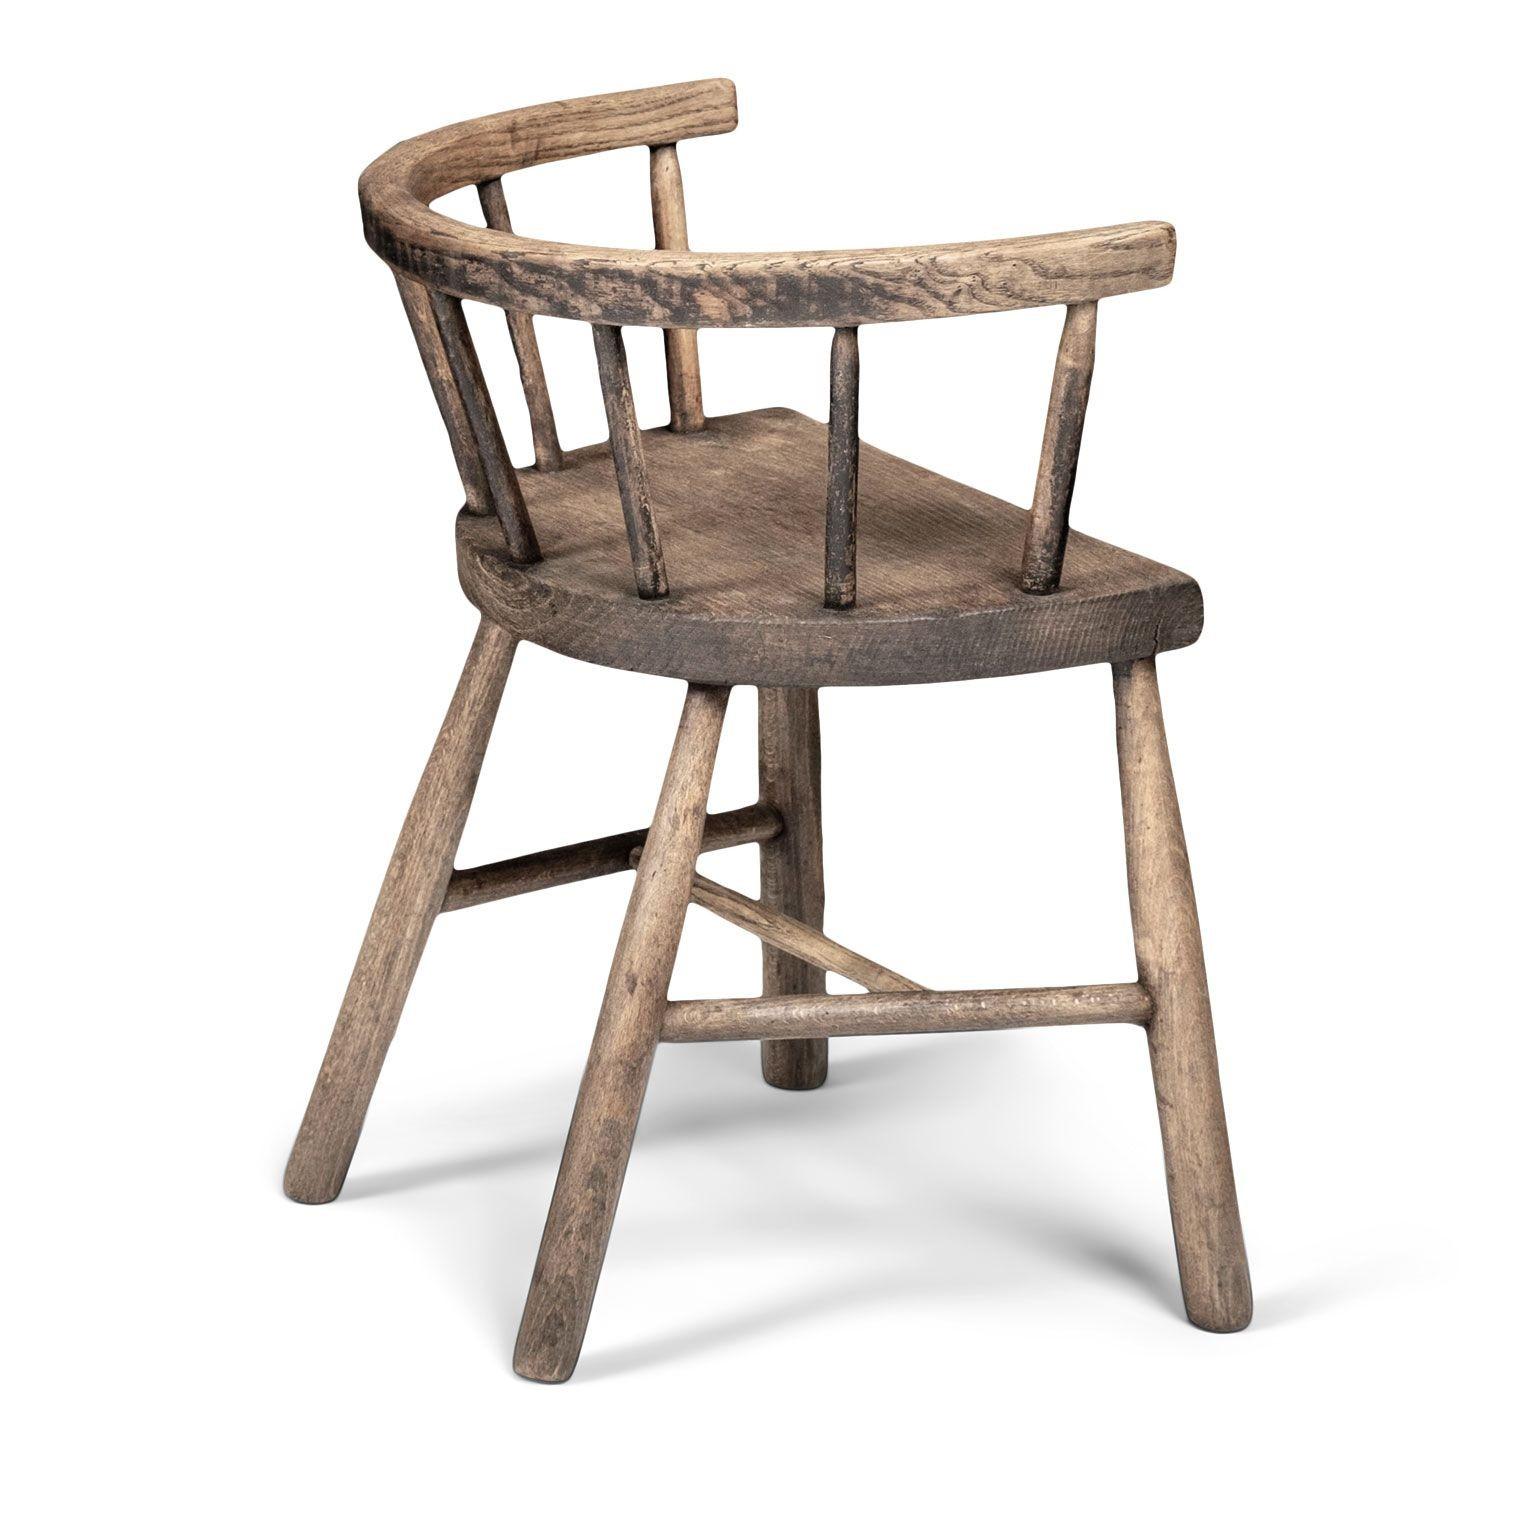 English 19th Century Small Vernacular Chair